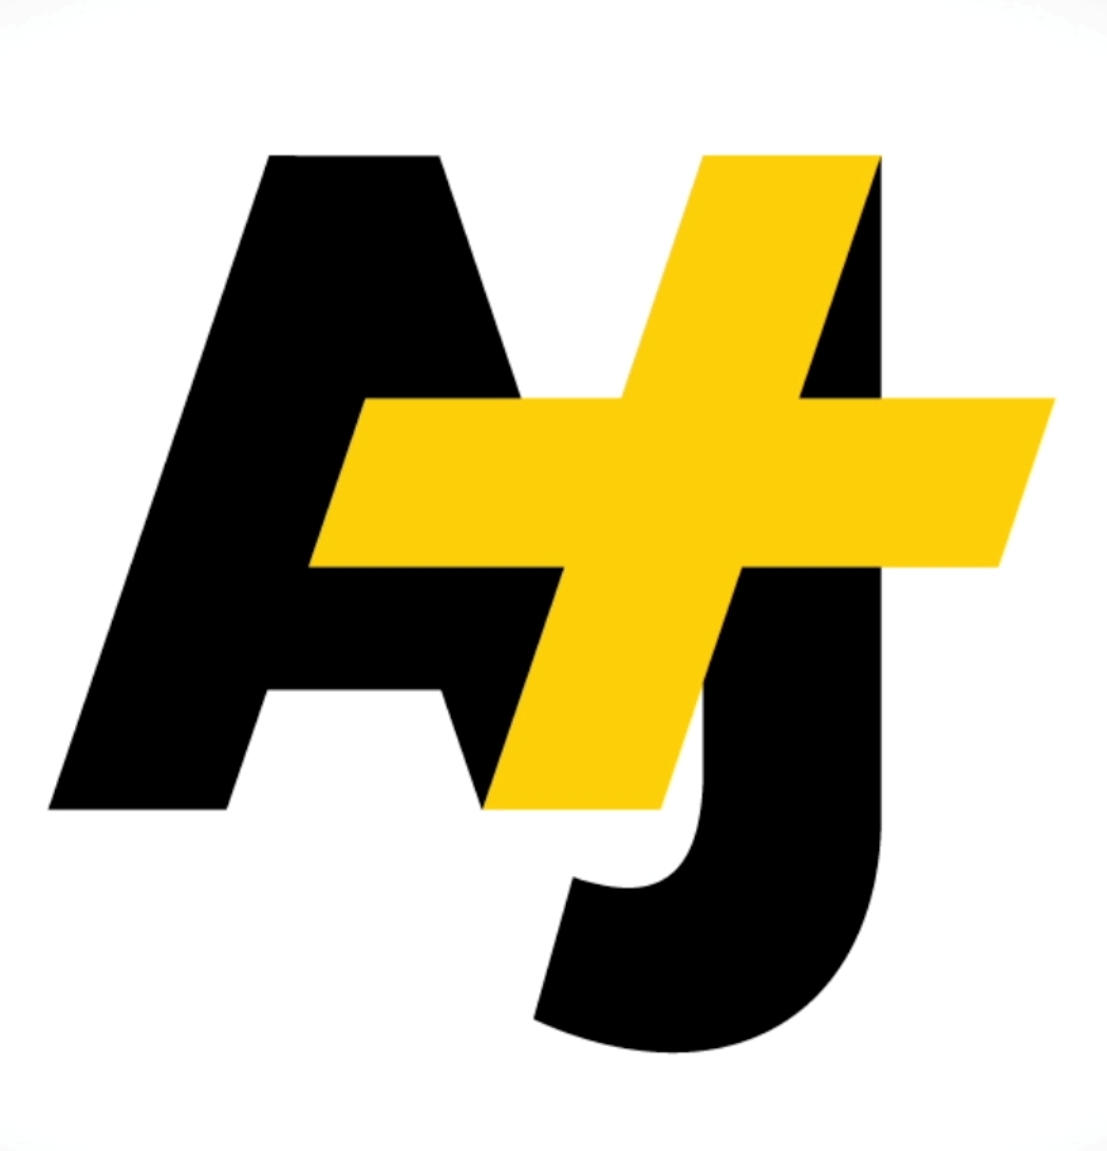 small network logo al jazeera